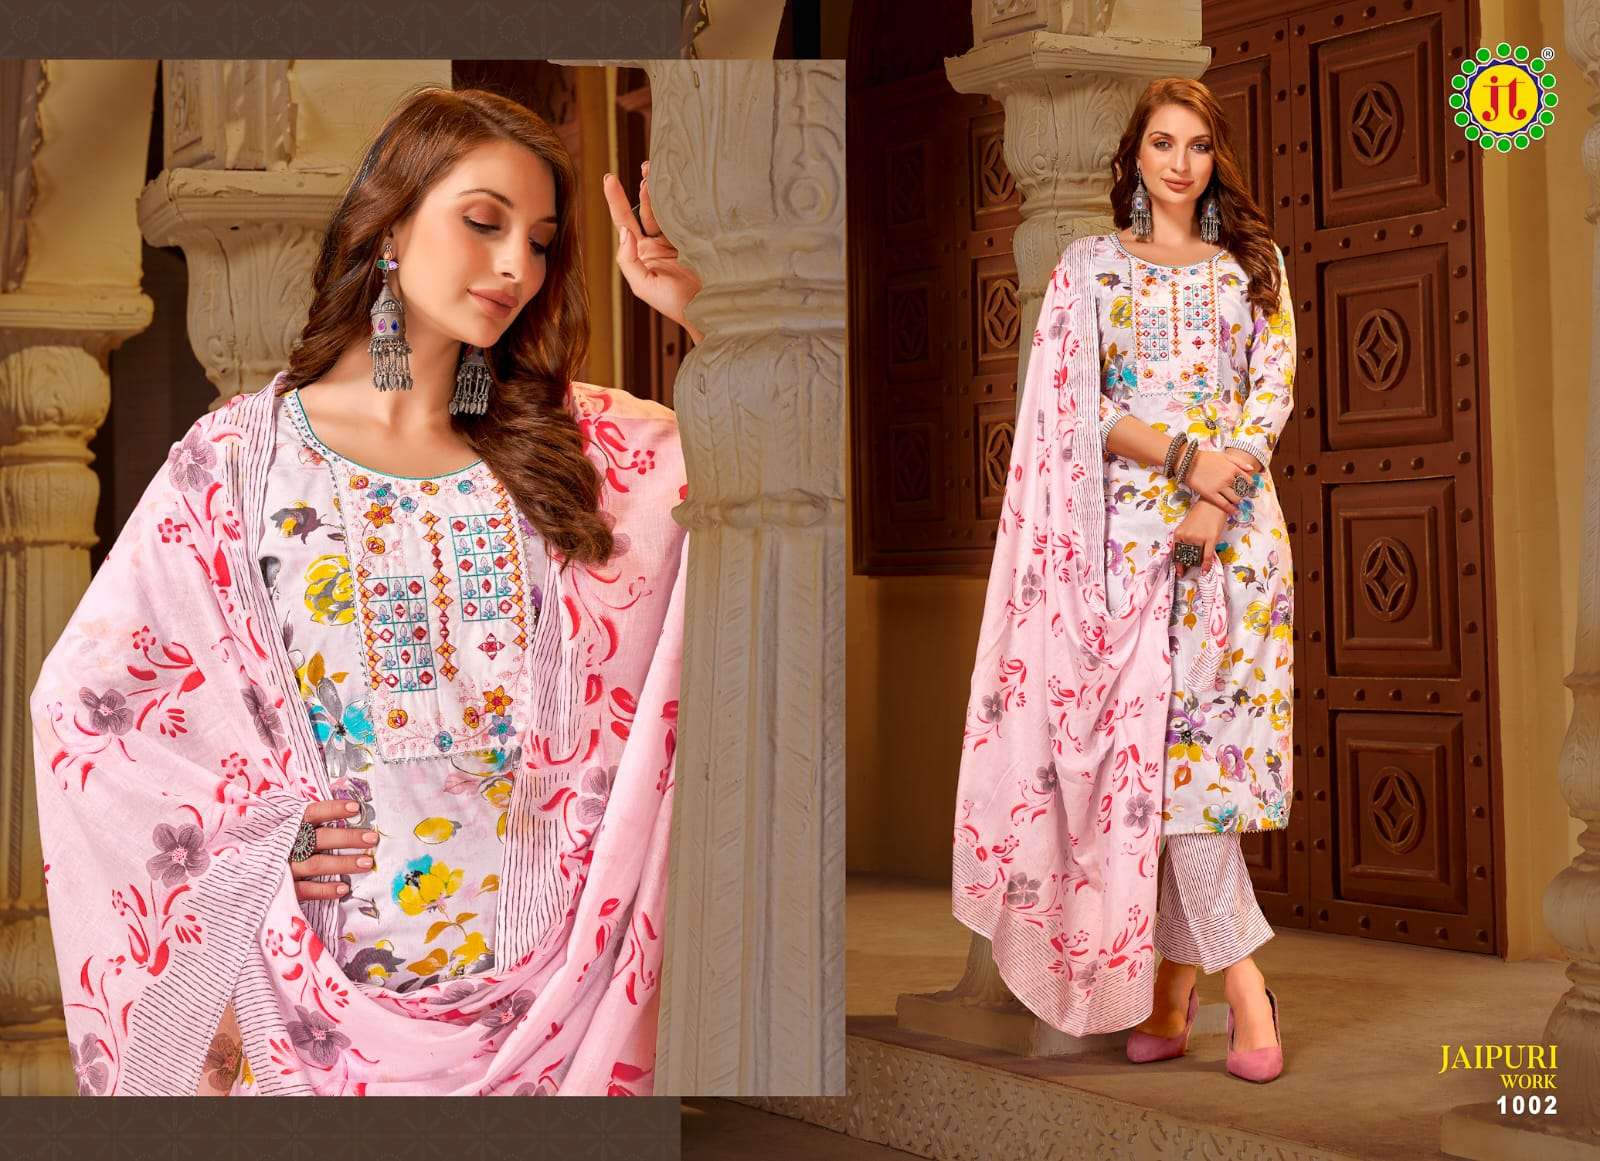 Jt Jaipuri Work Rayon Embroidery Dress Material Wholesale catalog